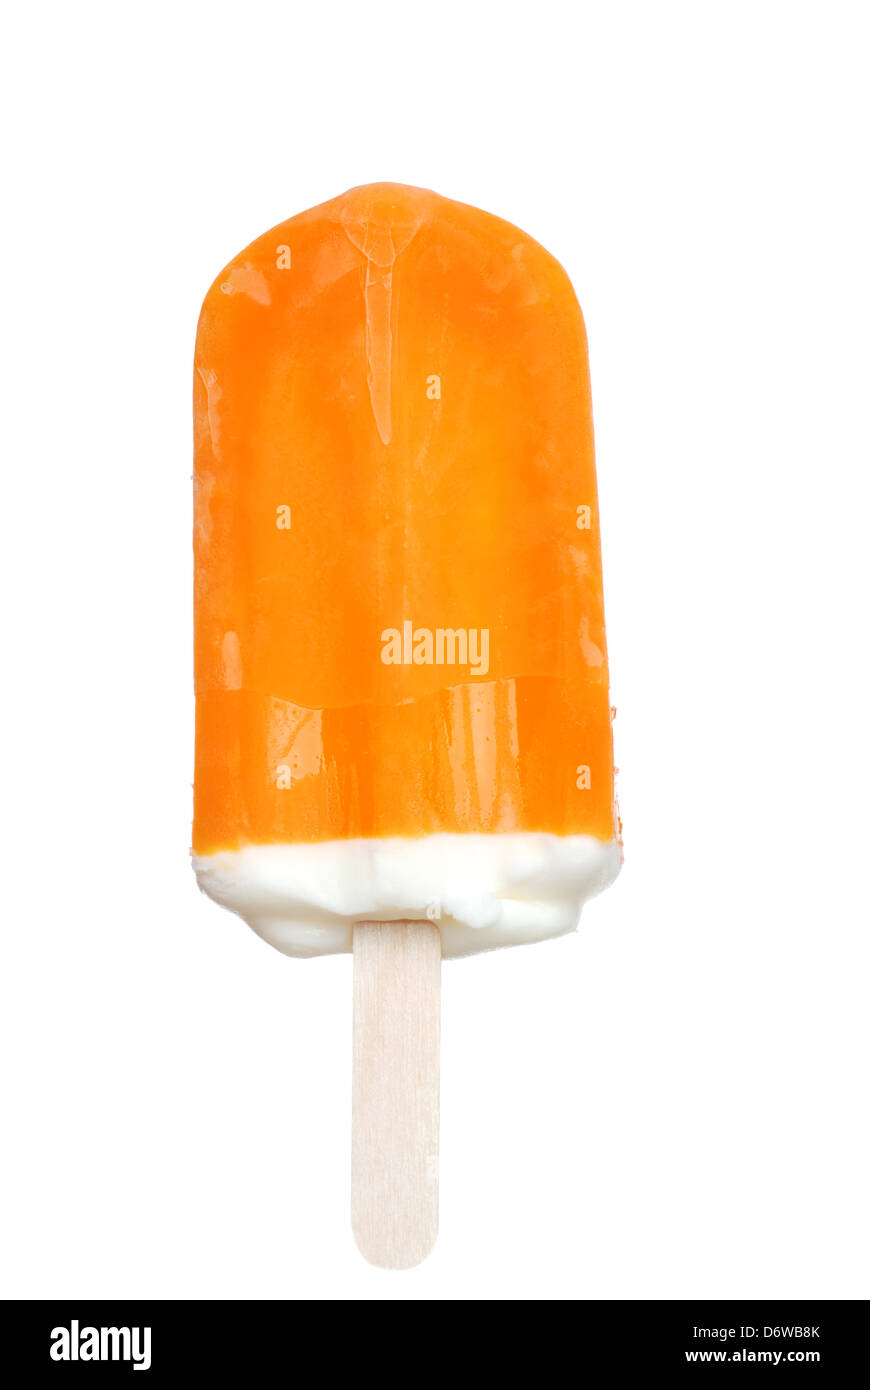 Orange creamsicle popsicle Stock Photo